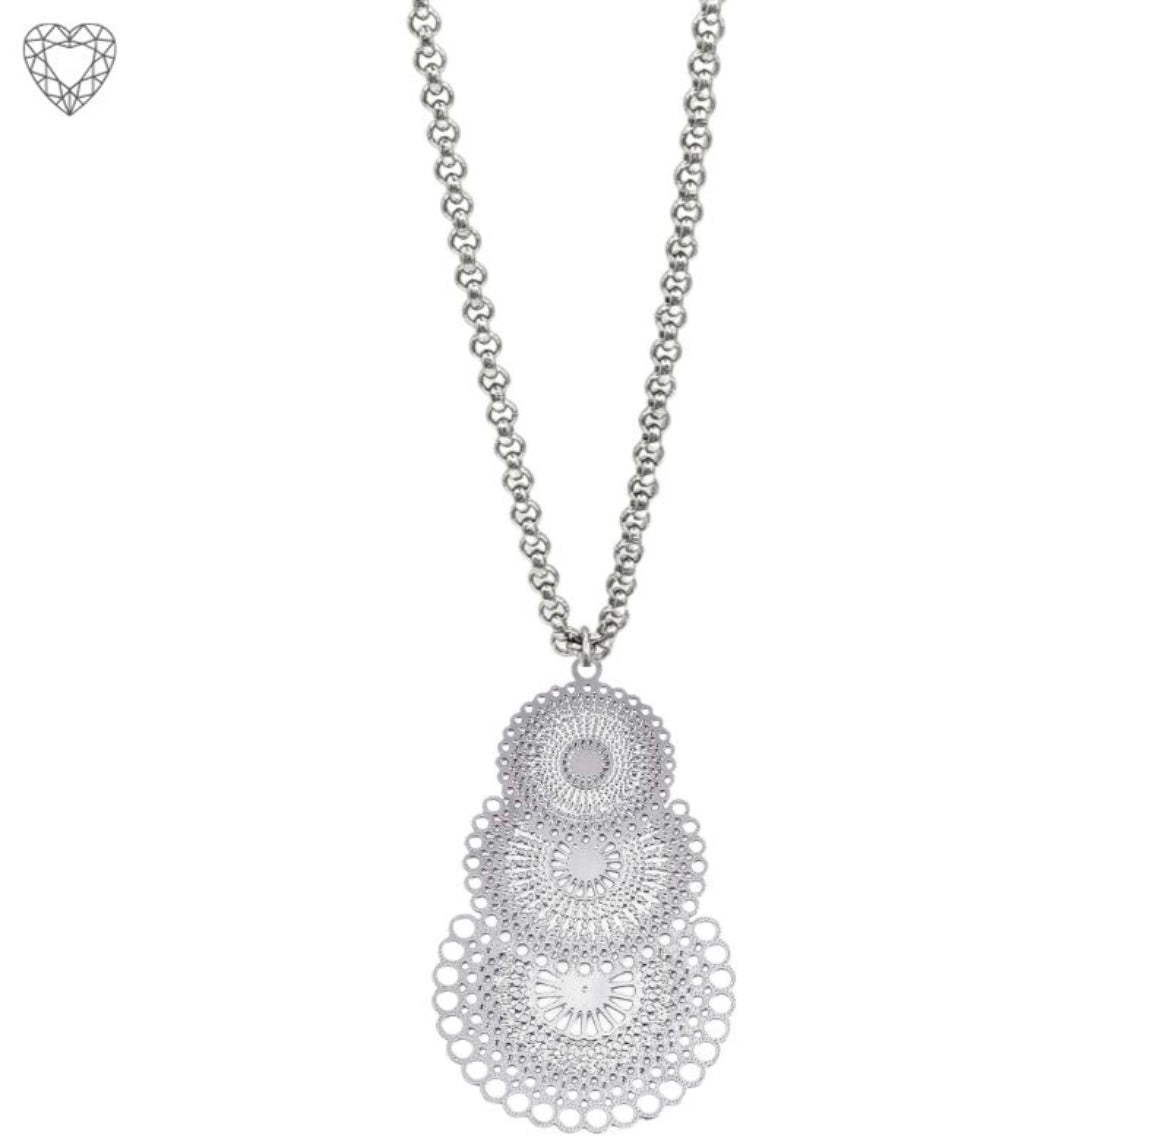 Belcher necklace with boho style pendant (ZN078)